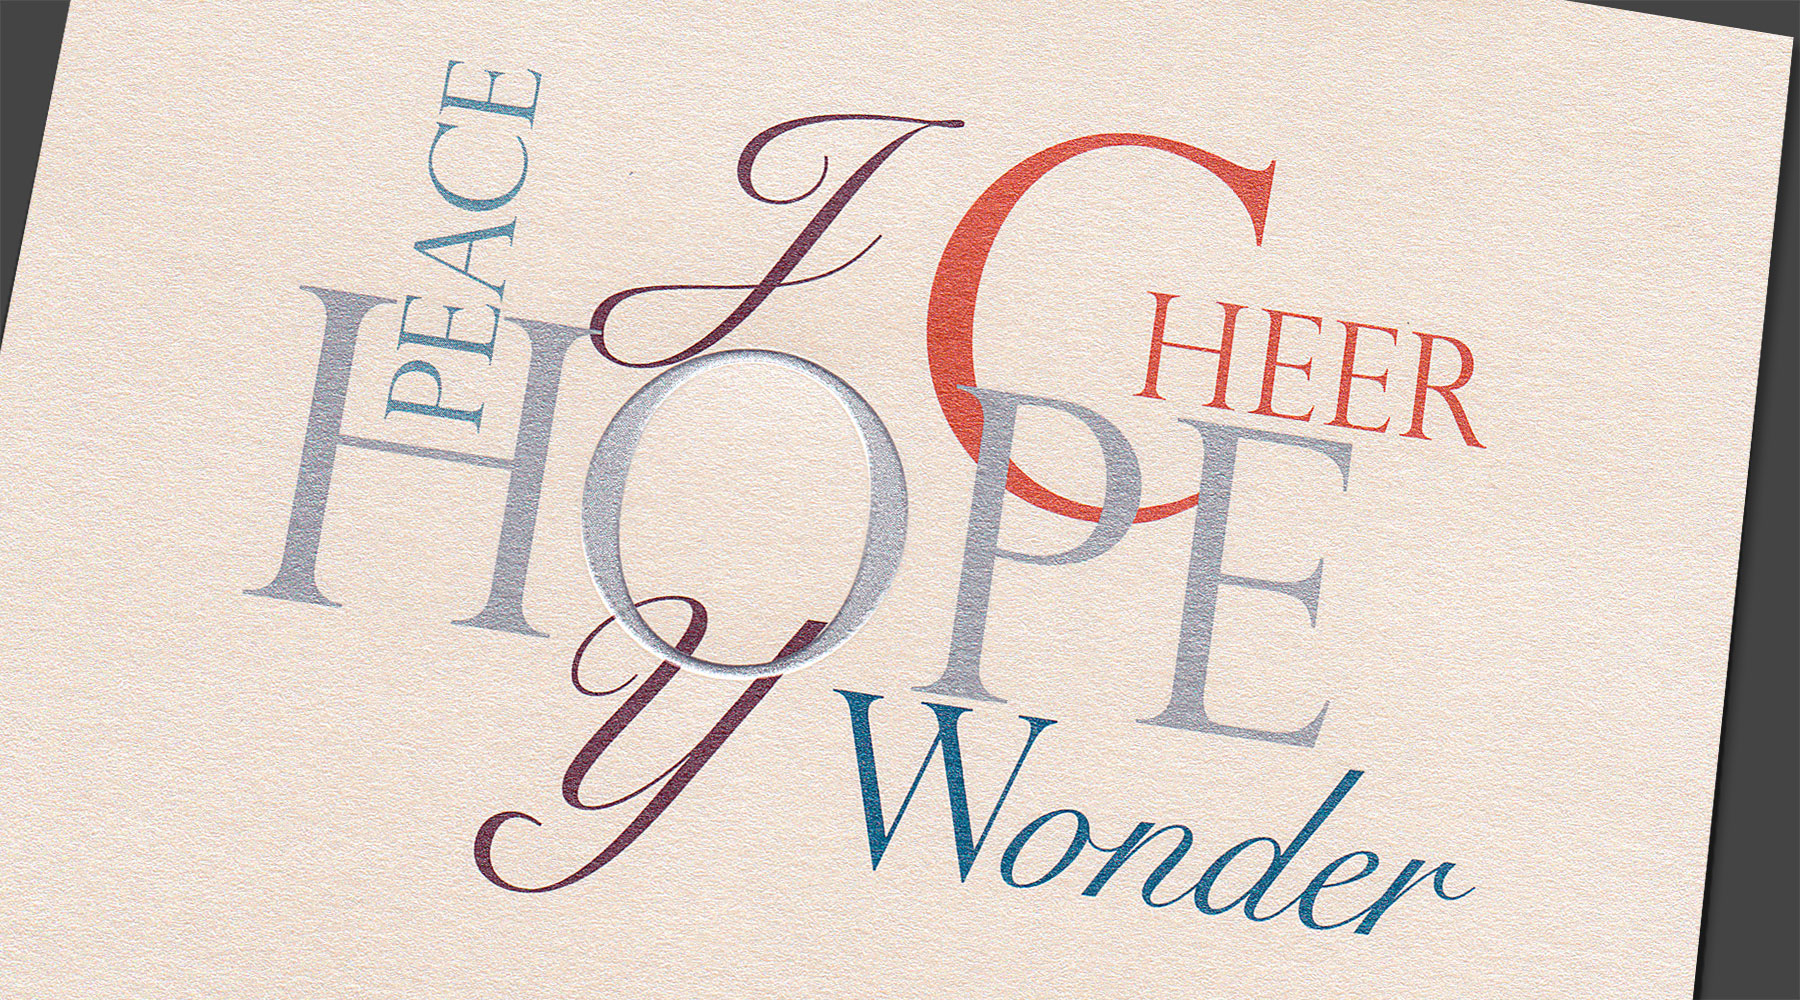 Typographic design: hope, joy, cheer, wonder, joy, peace